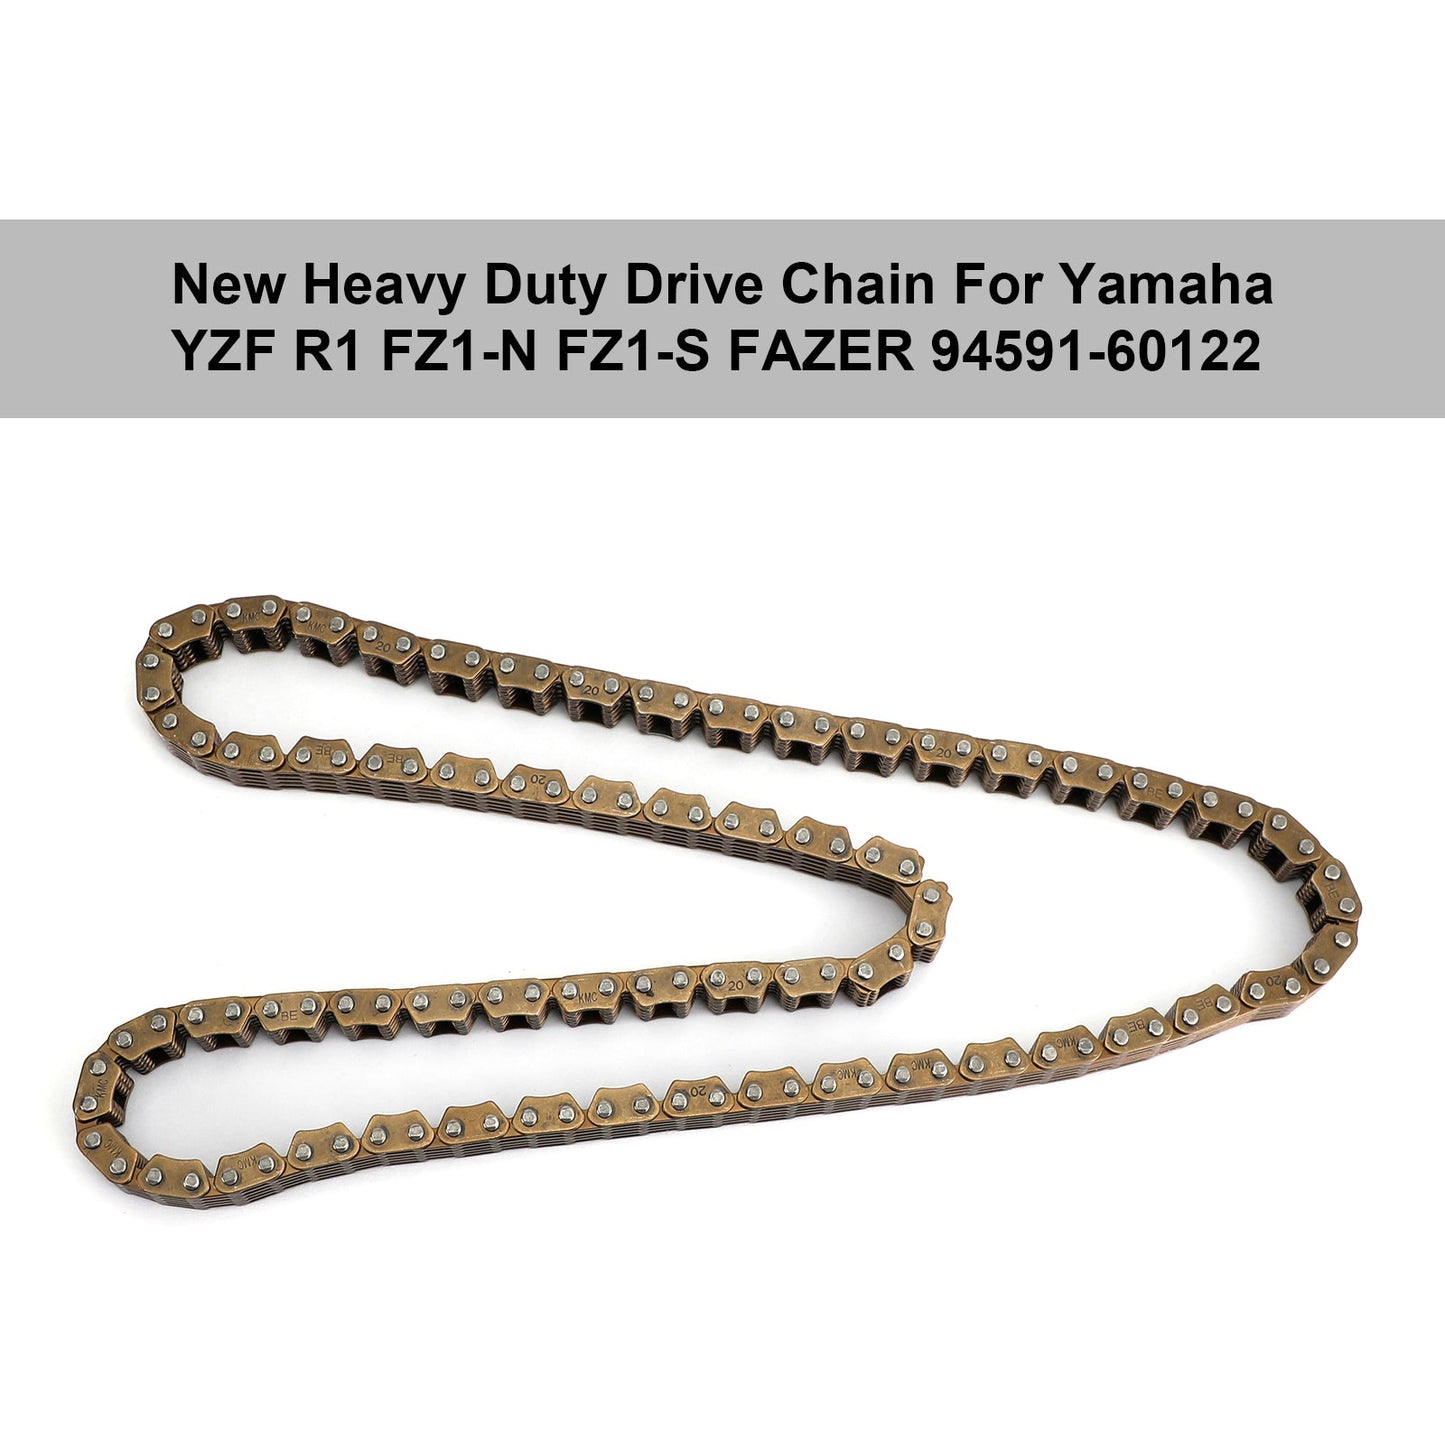 New Heavy Duty Drive Chain For Yamaha Yzf R1 Fz1-N Fz1-S Fazer 94591-60122